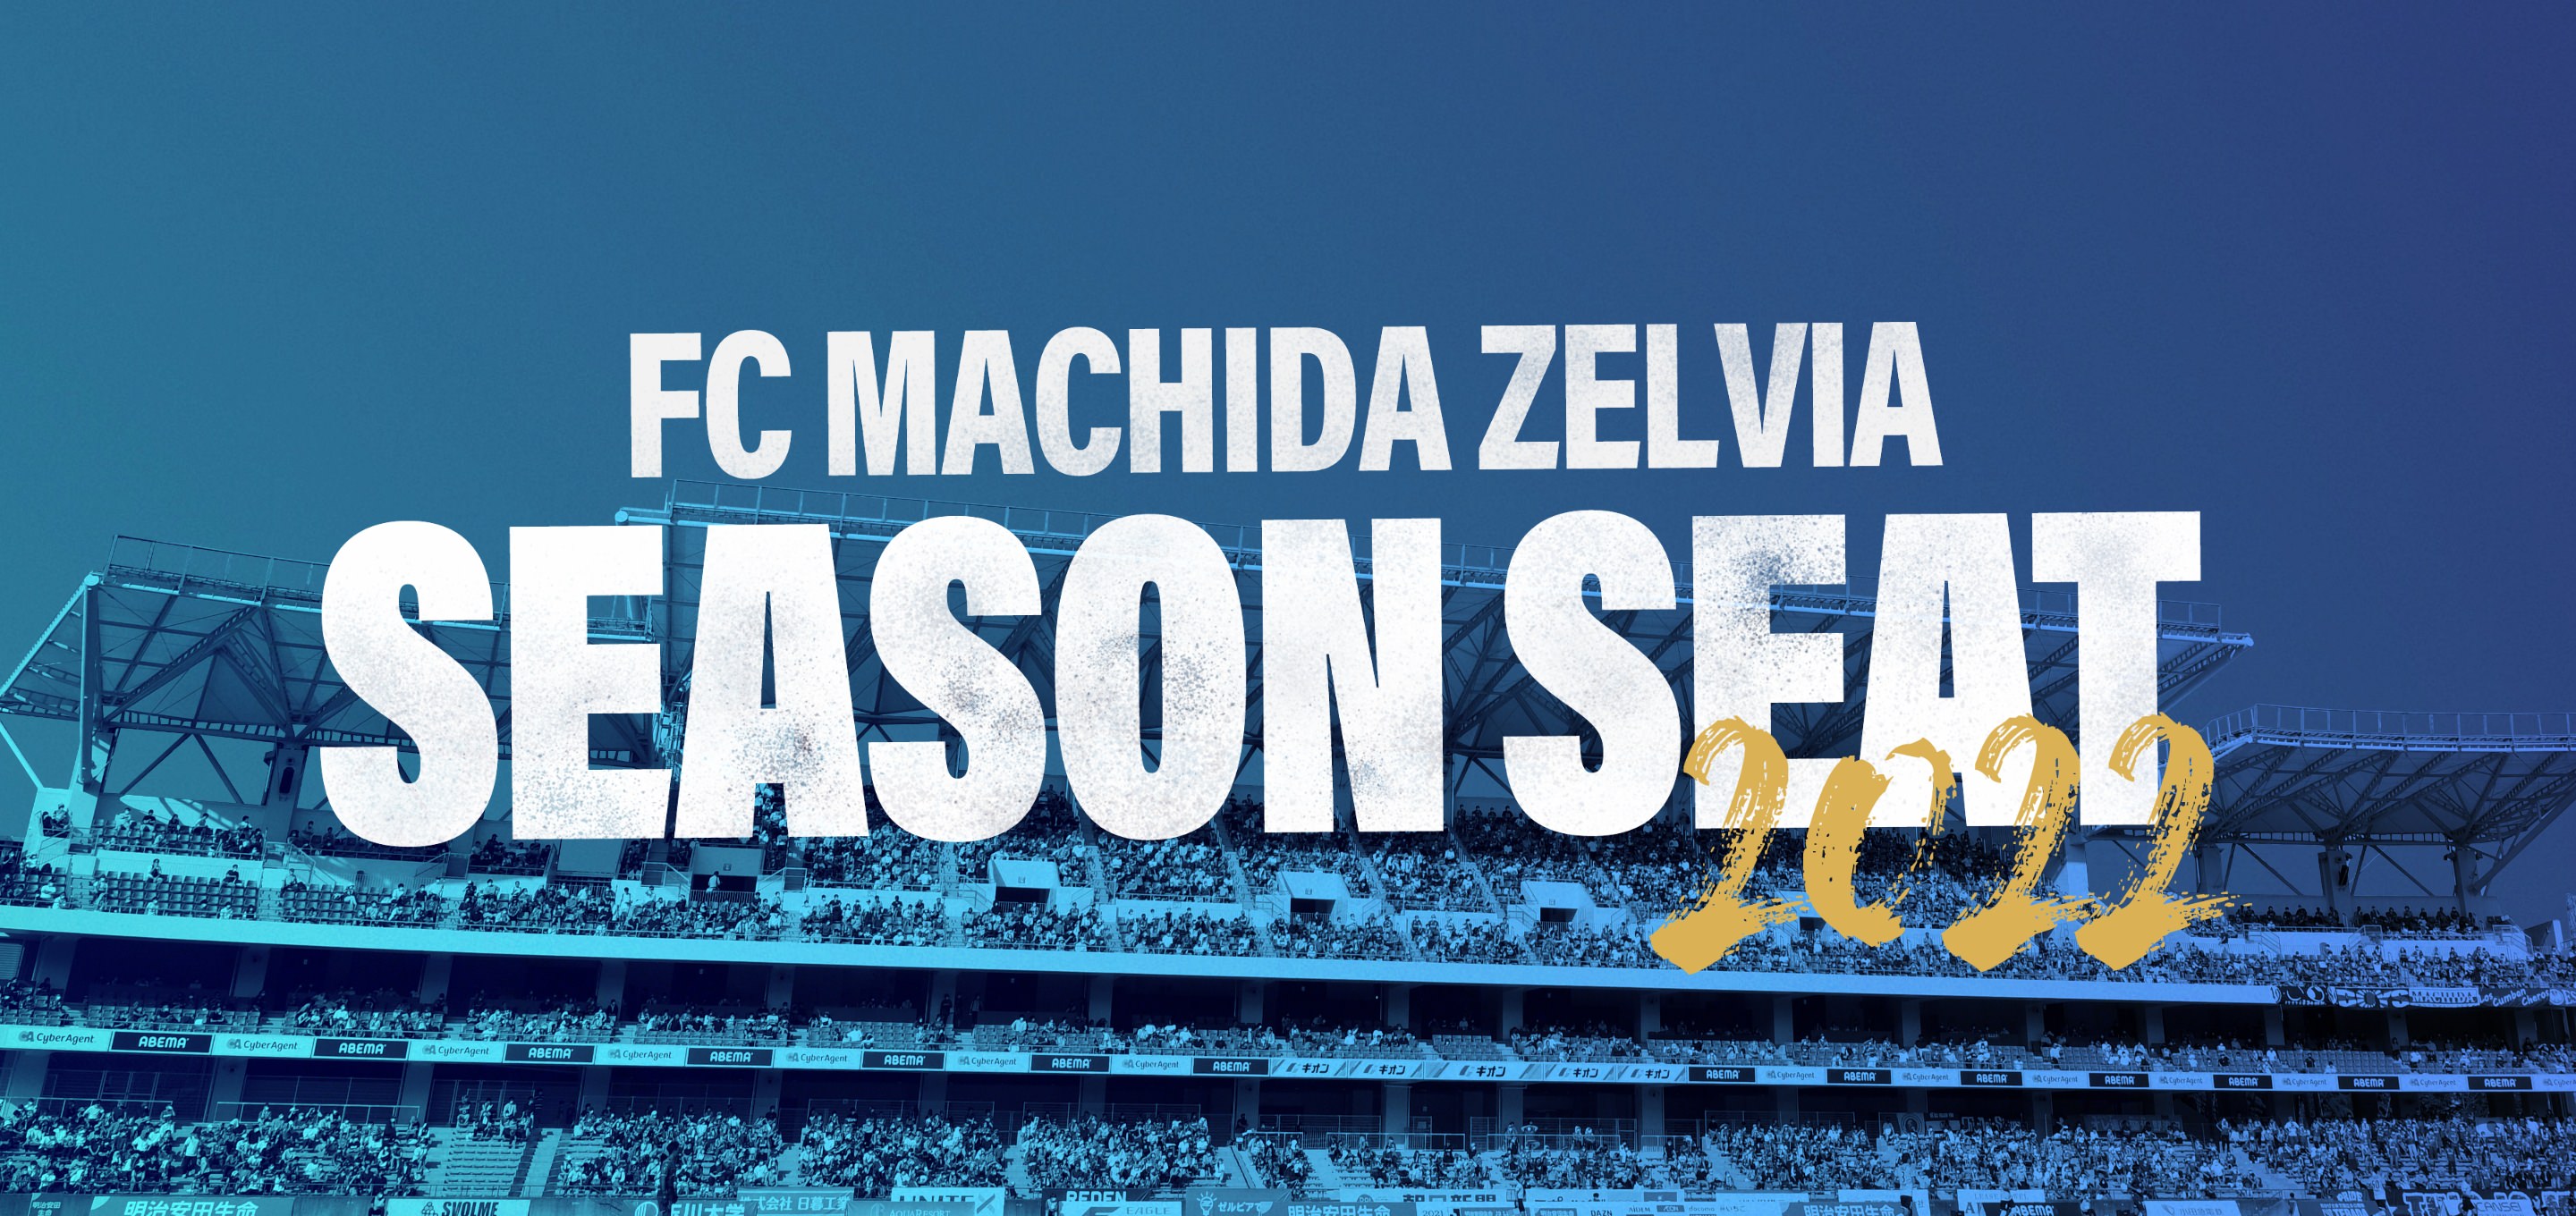 FC MACHIDA ZELVIA SEASON SEAT